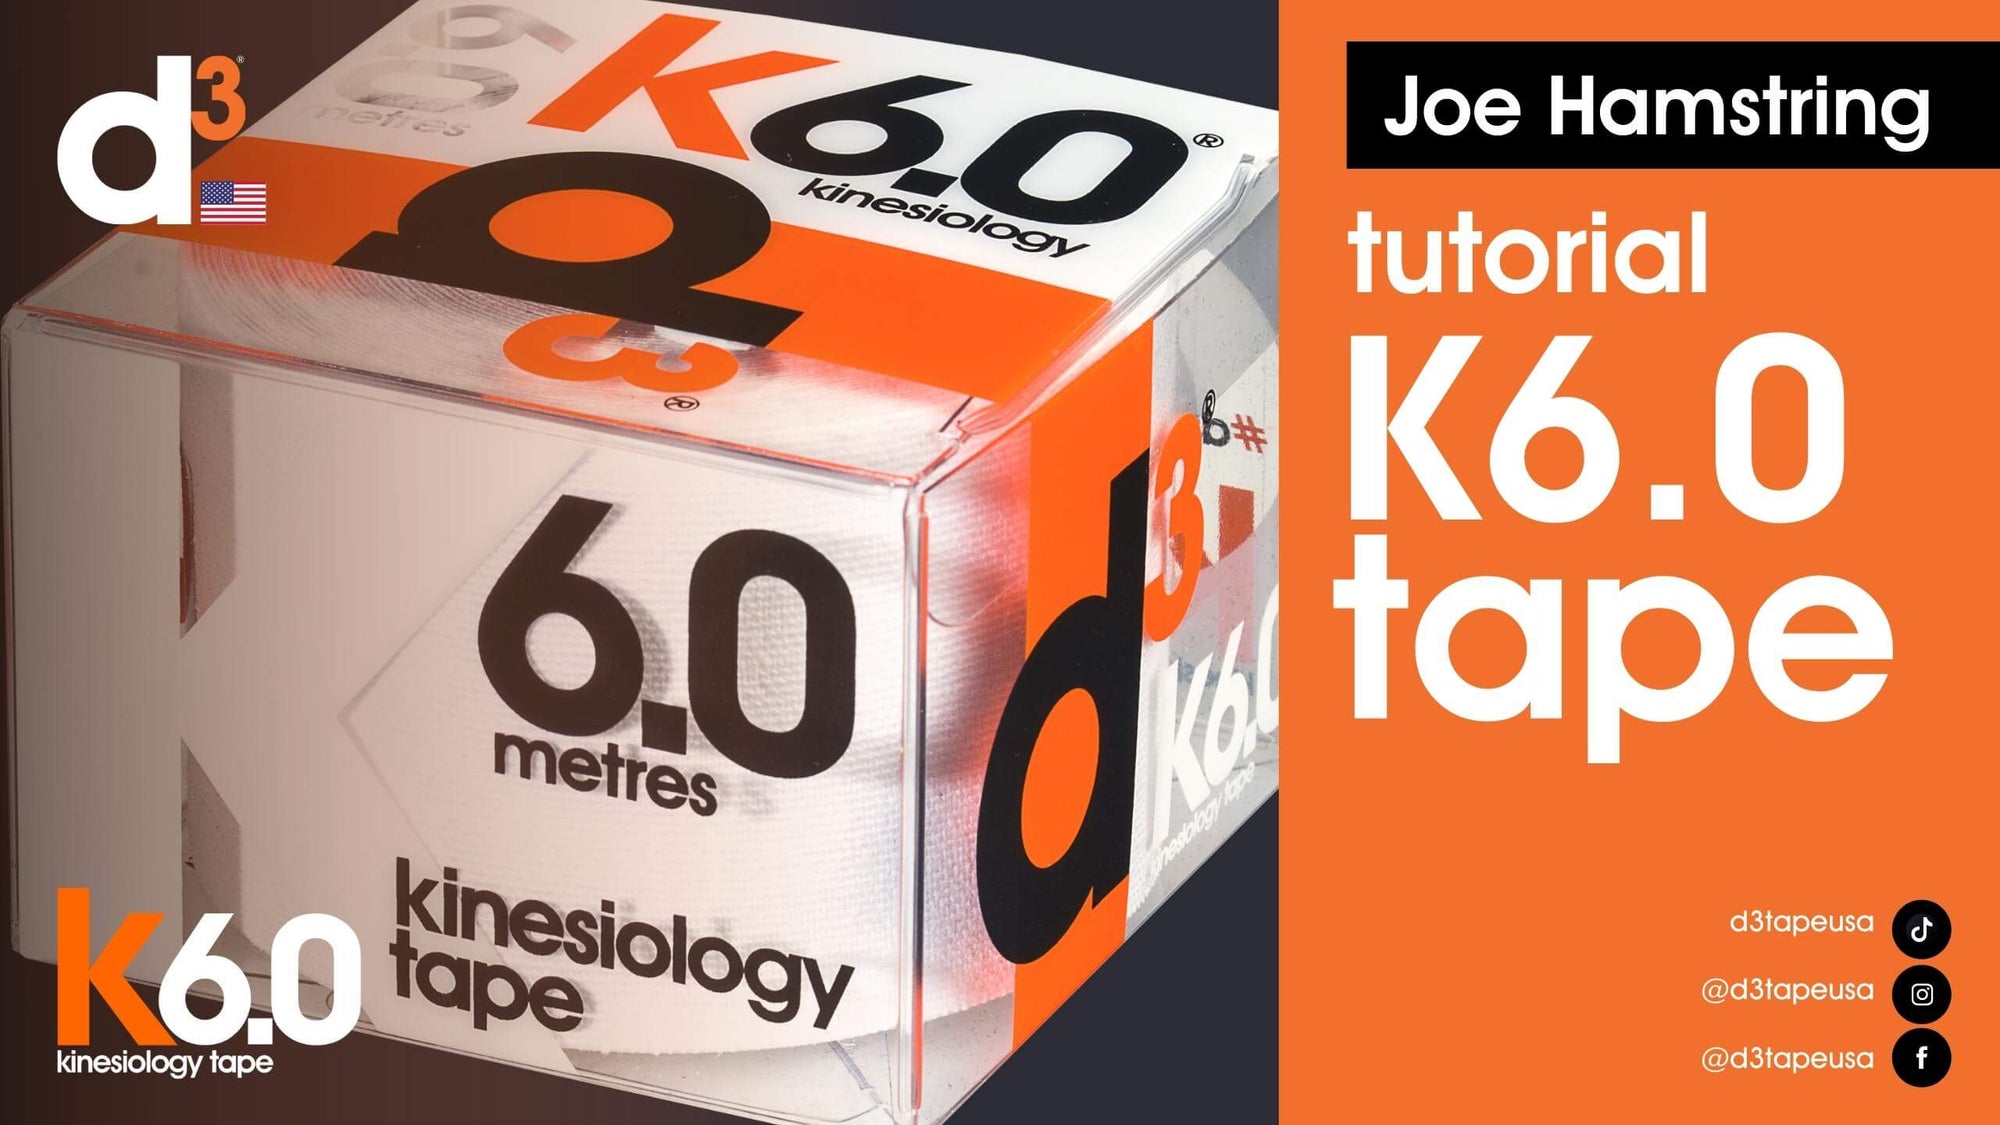 Tutorial - Joe Hamstring - K6.0 kinesiology Tape